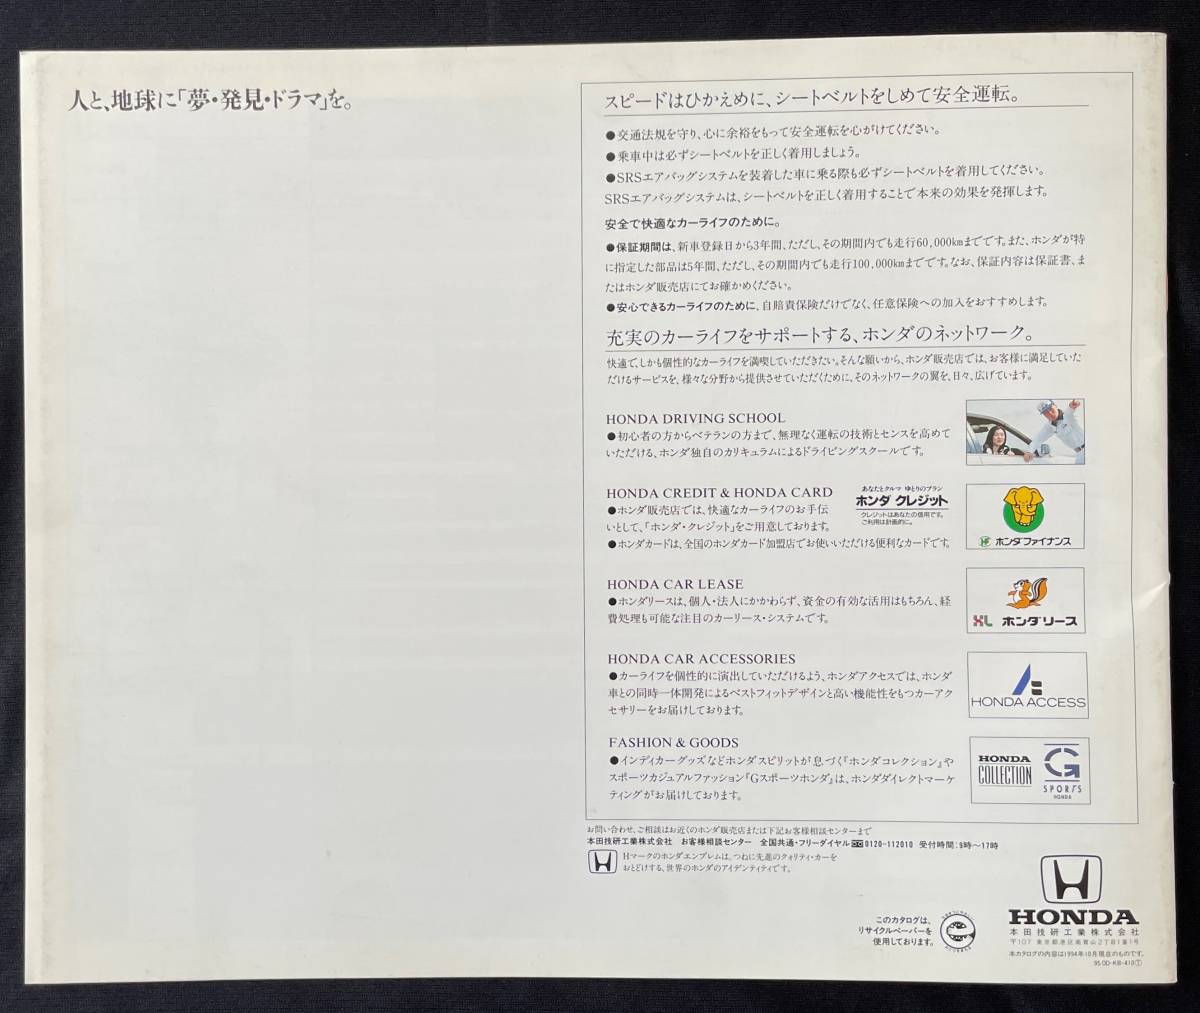  Honda Odyssey каталог 1994.10 J2